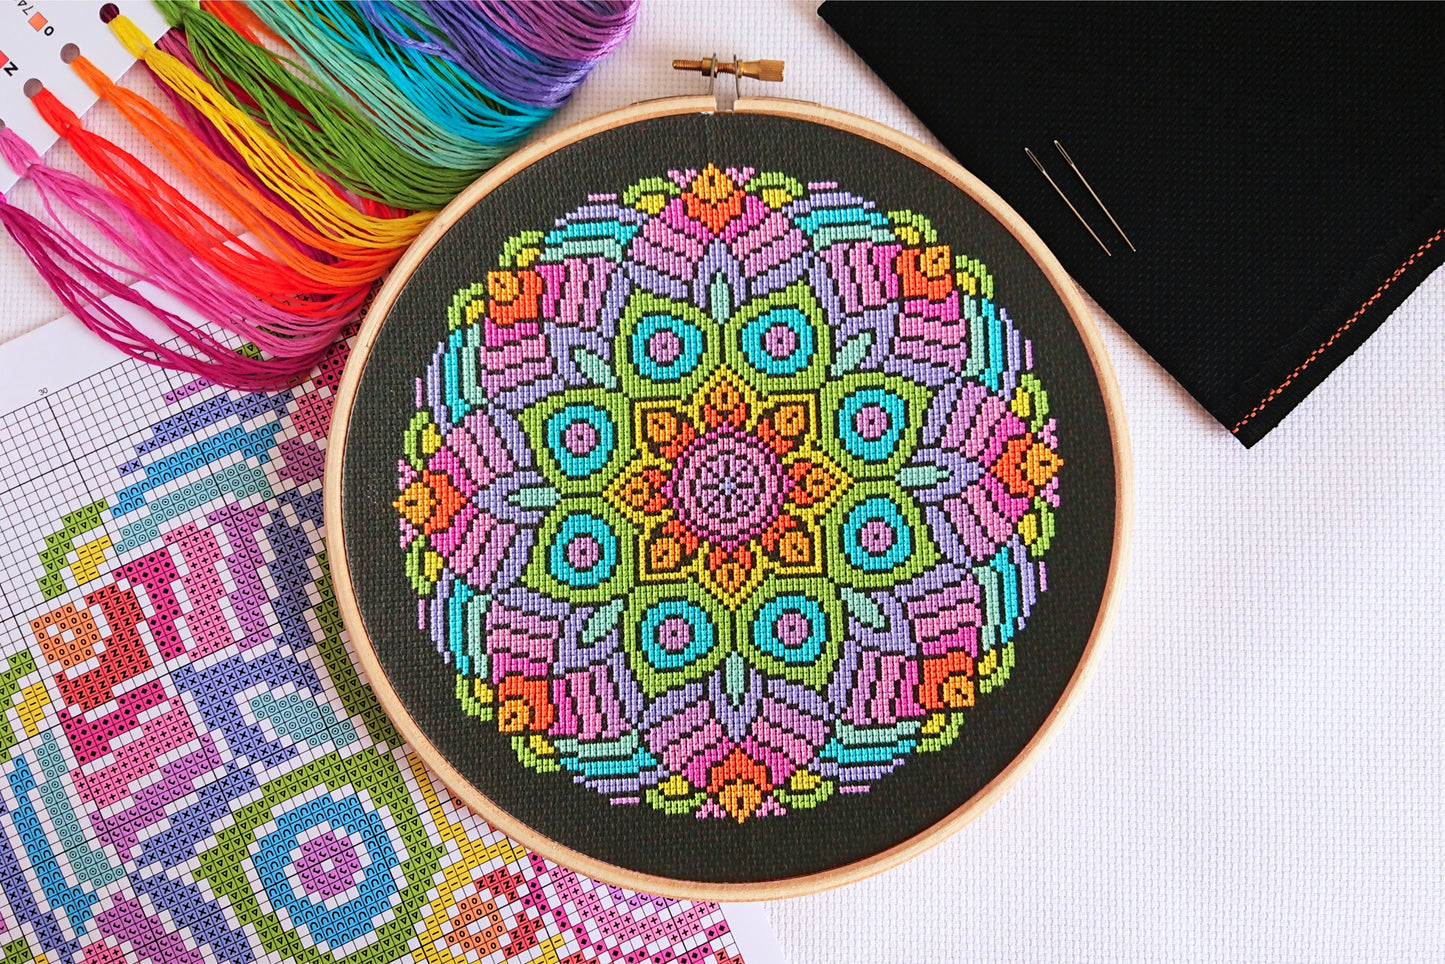 Rainbow Mandala (Black Fabric) Cross Stitch Kit